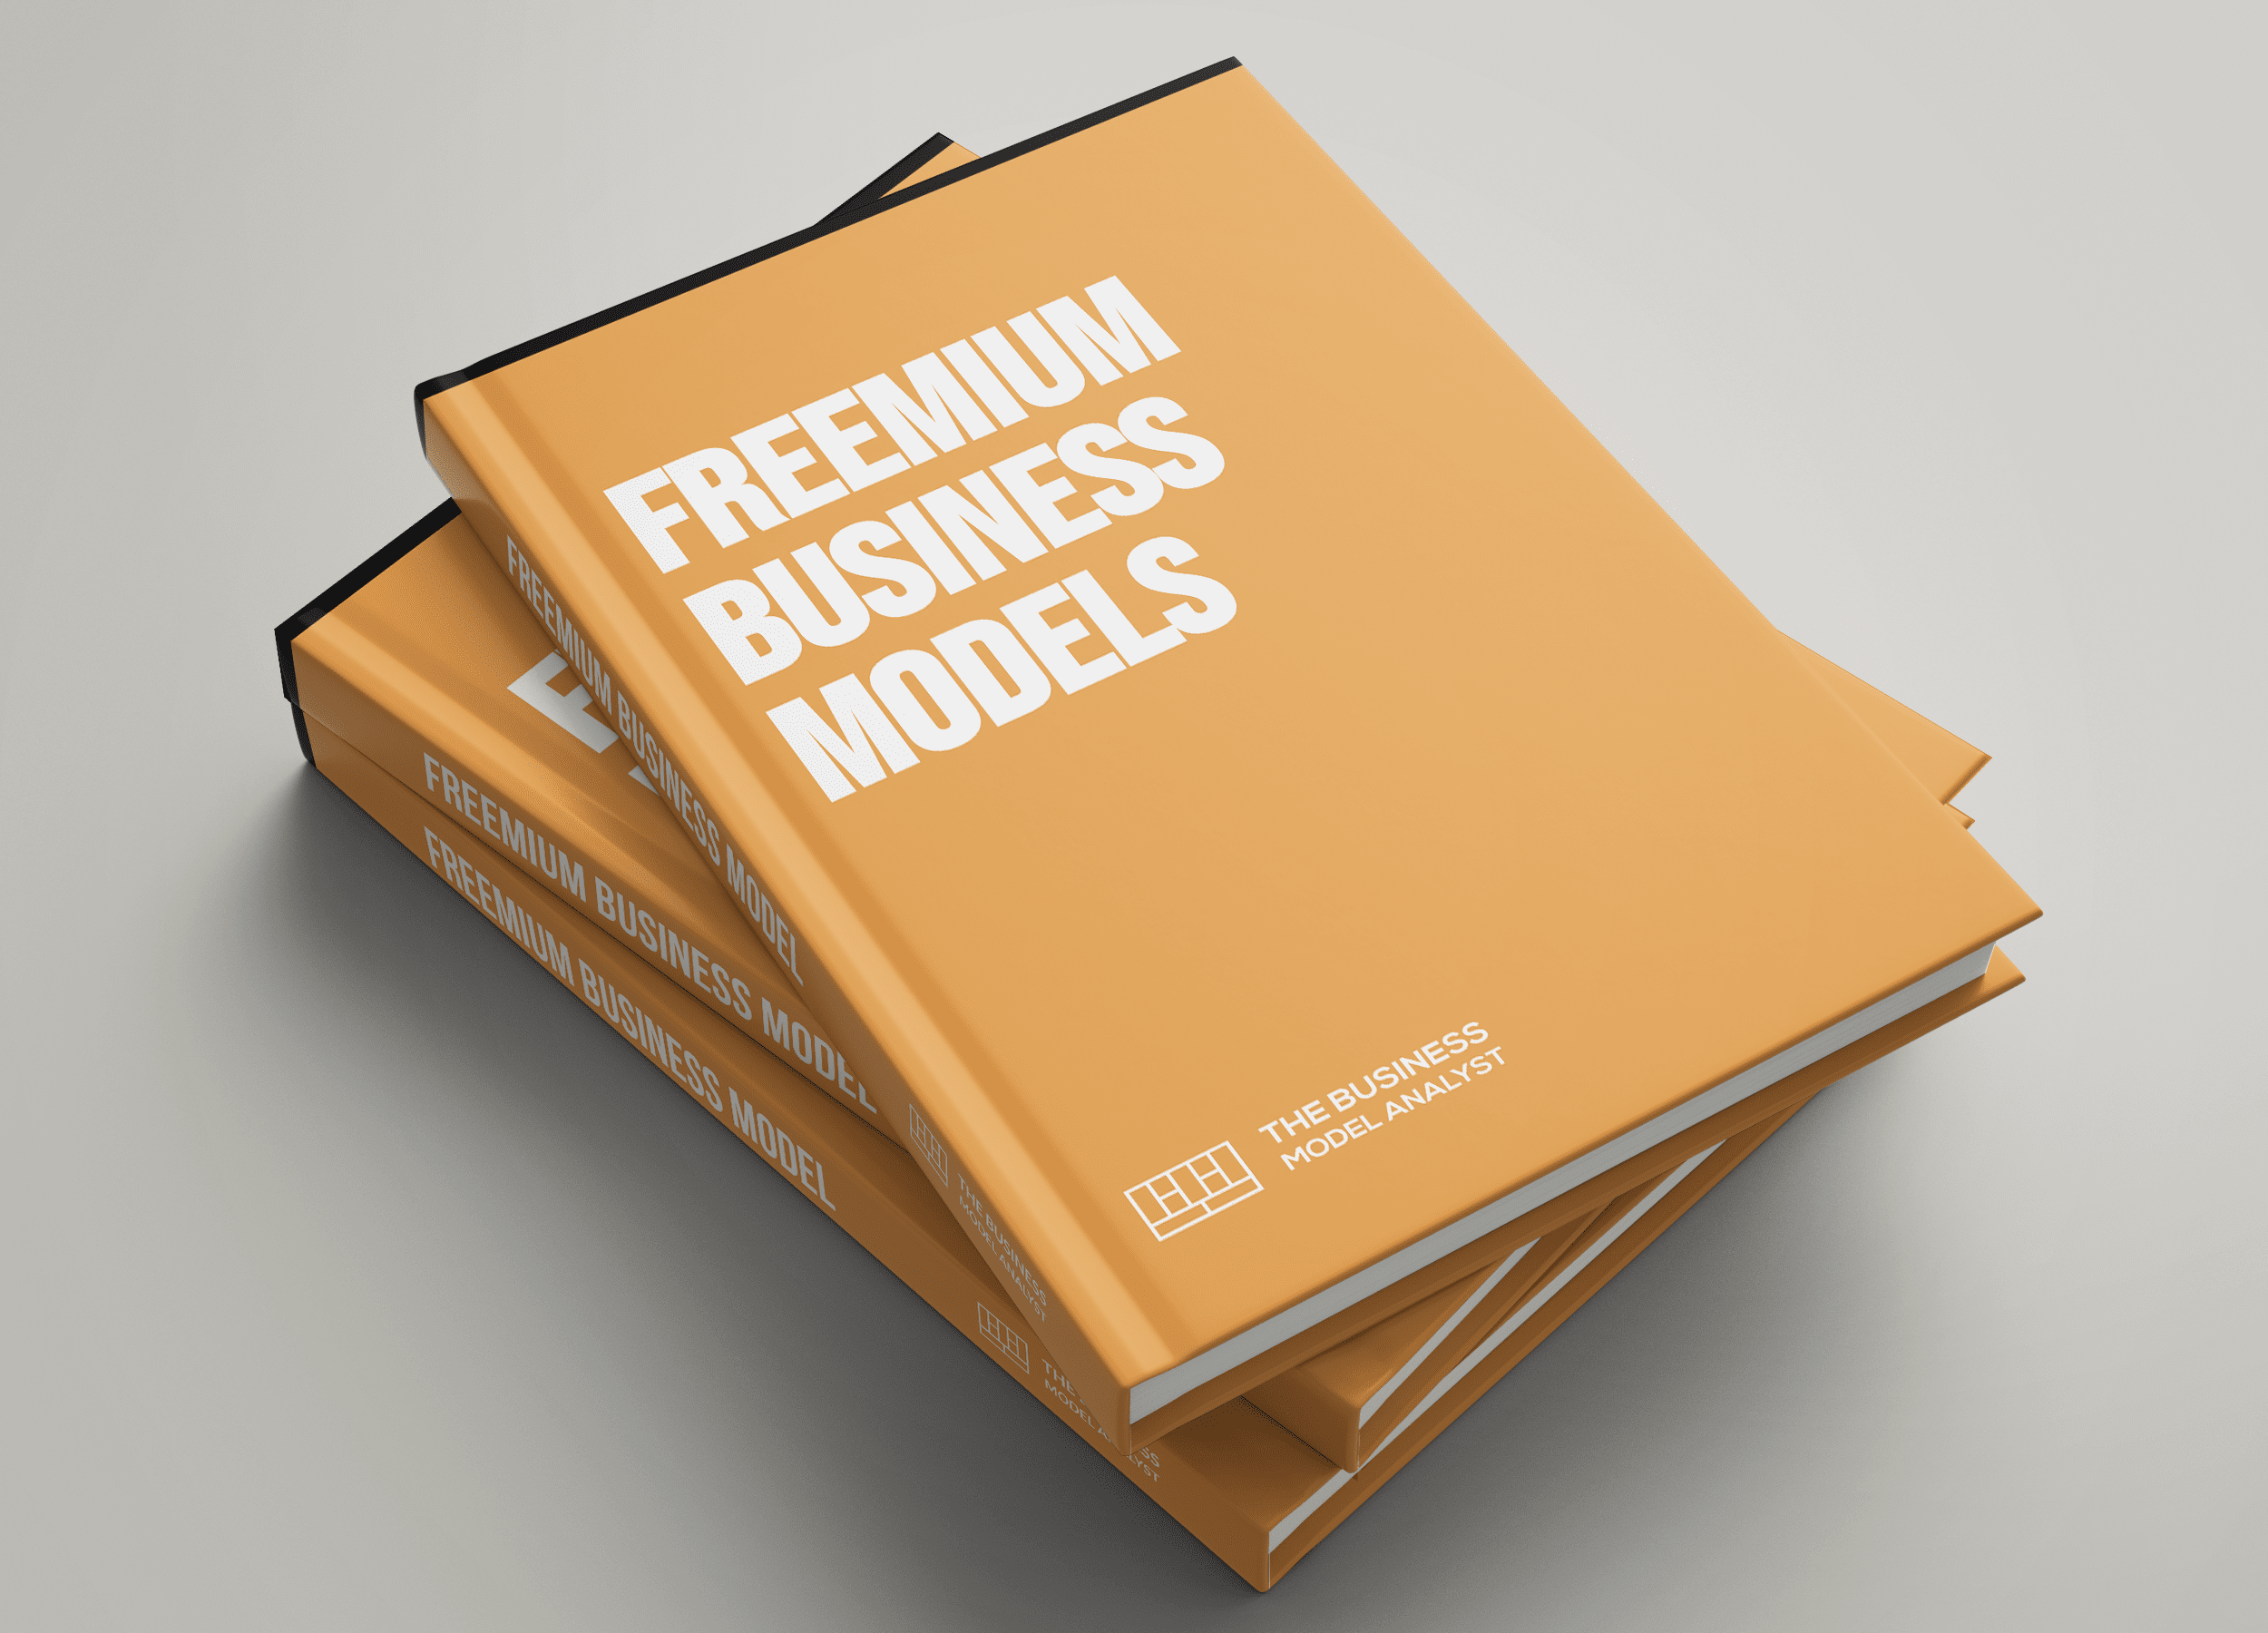 Freemium Business Models Covers